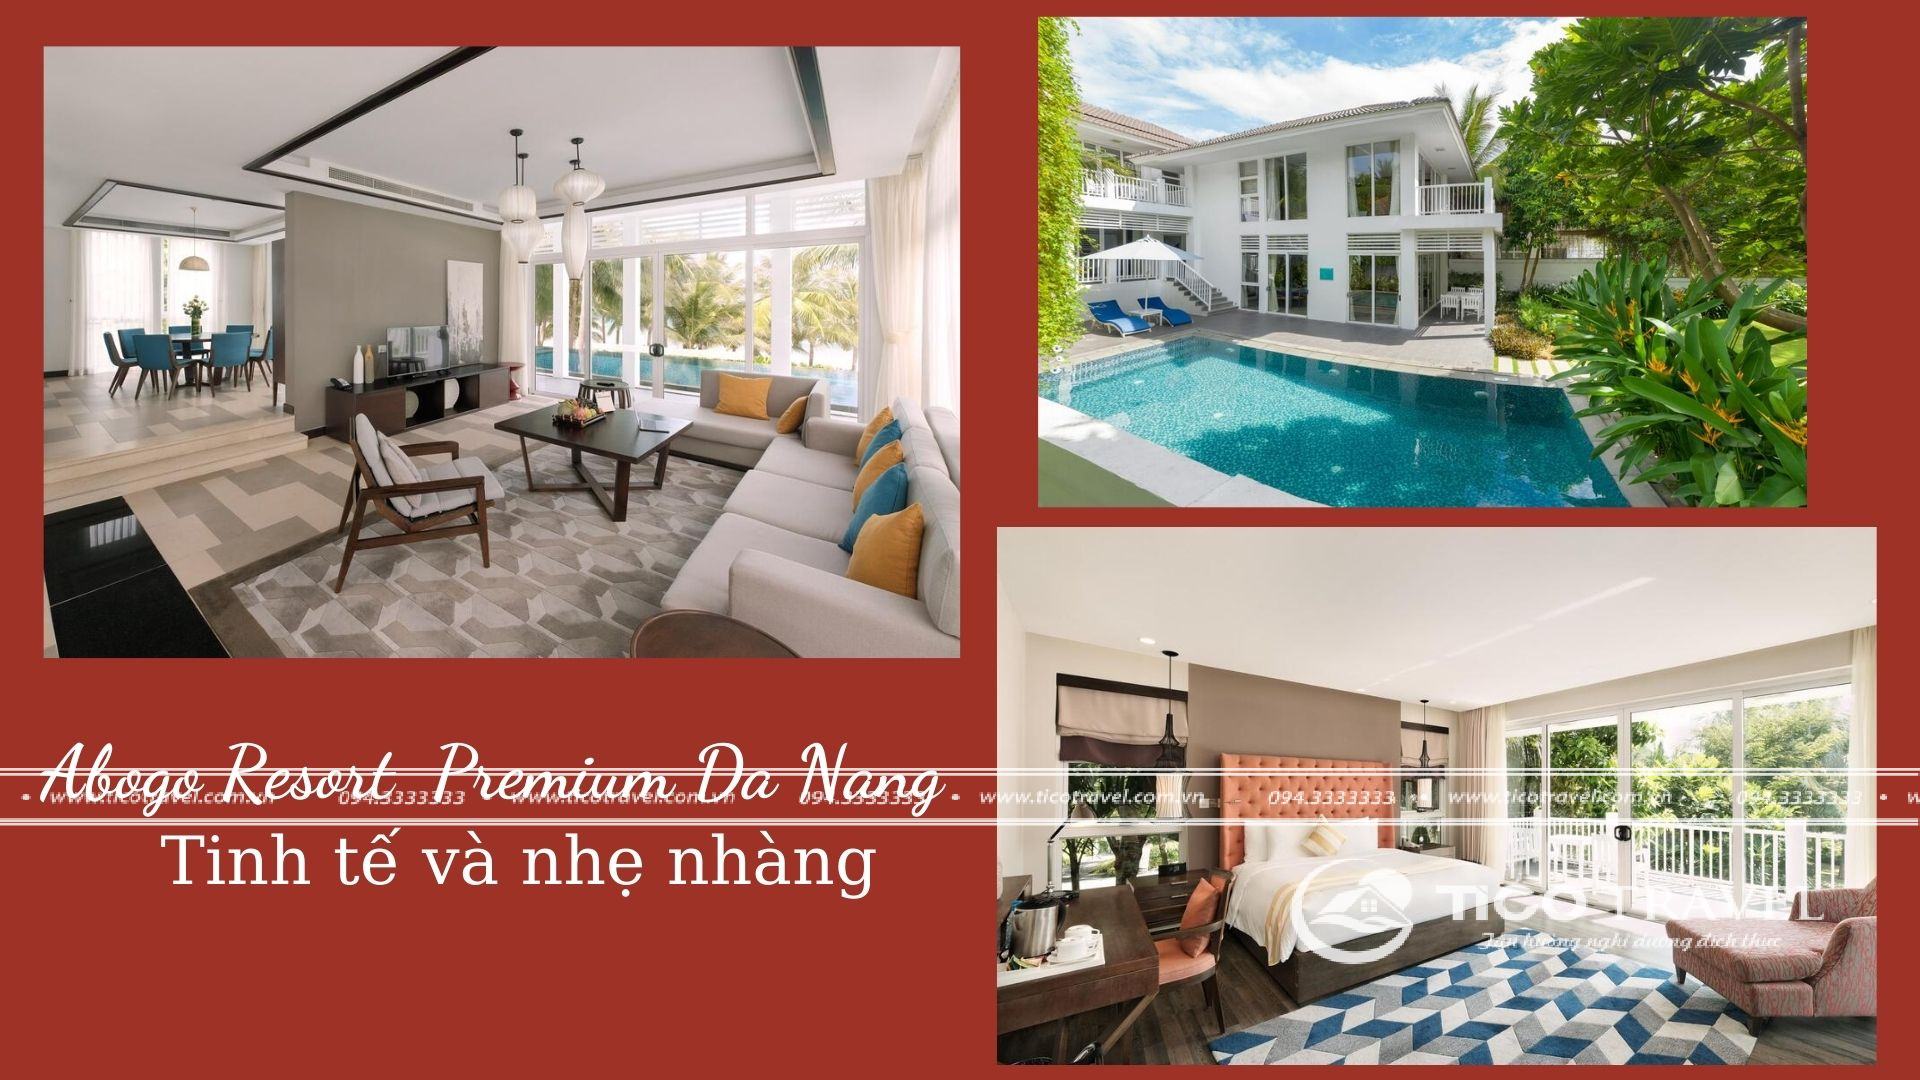 Ảnh chụp toàn cảnh tại Abogo Resort Villa Premium Da Nang